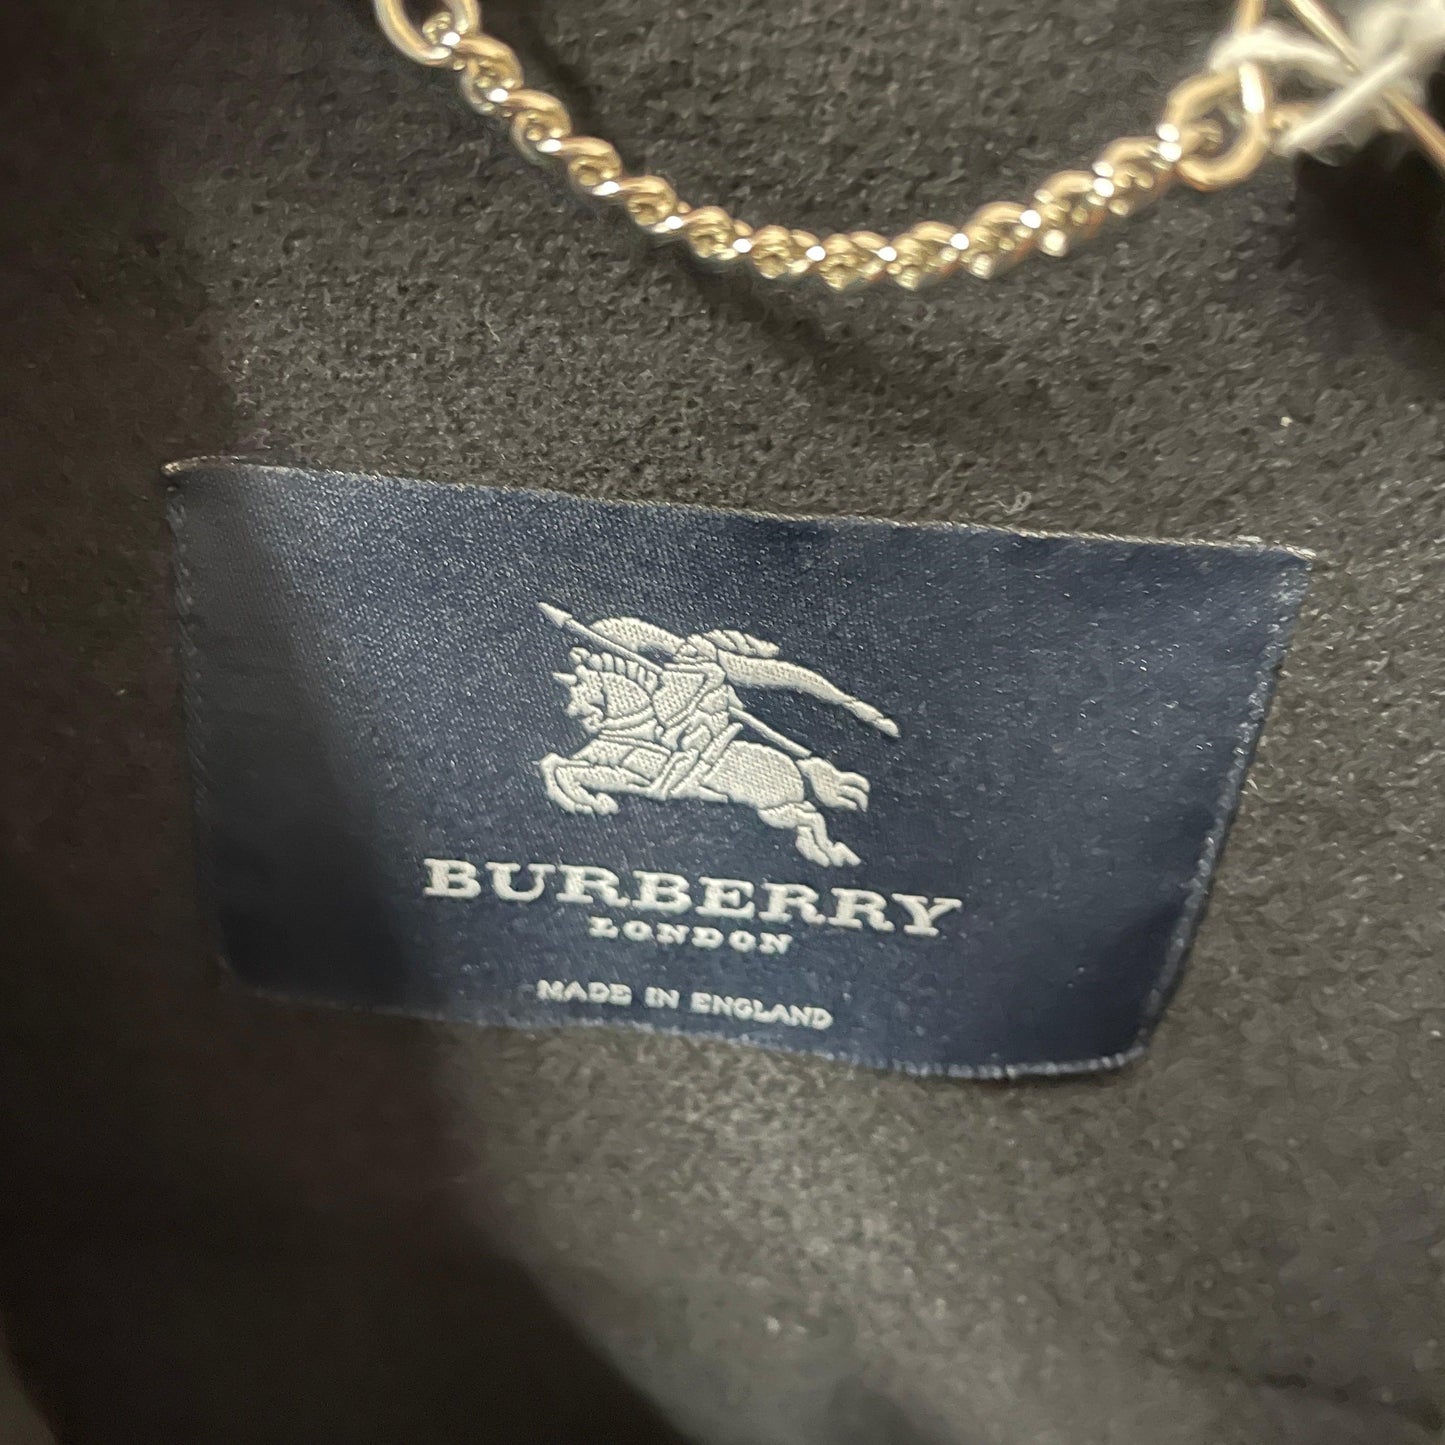 burberrys coat duffel coat herringbone hooded